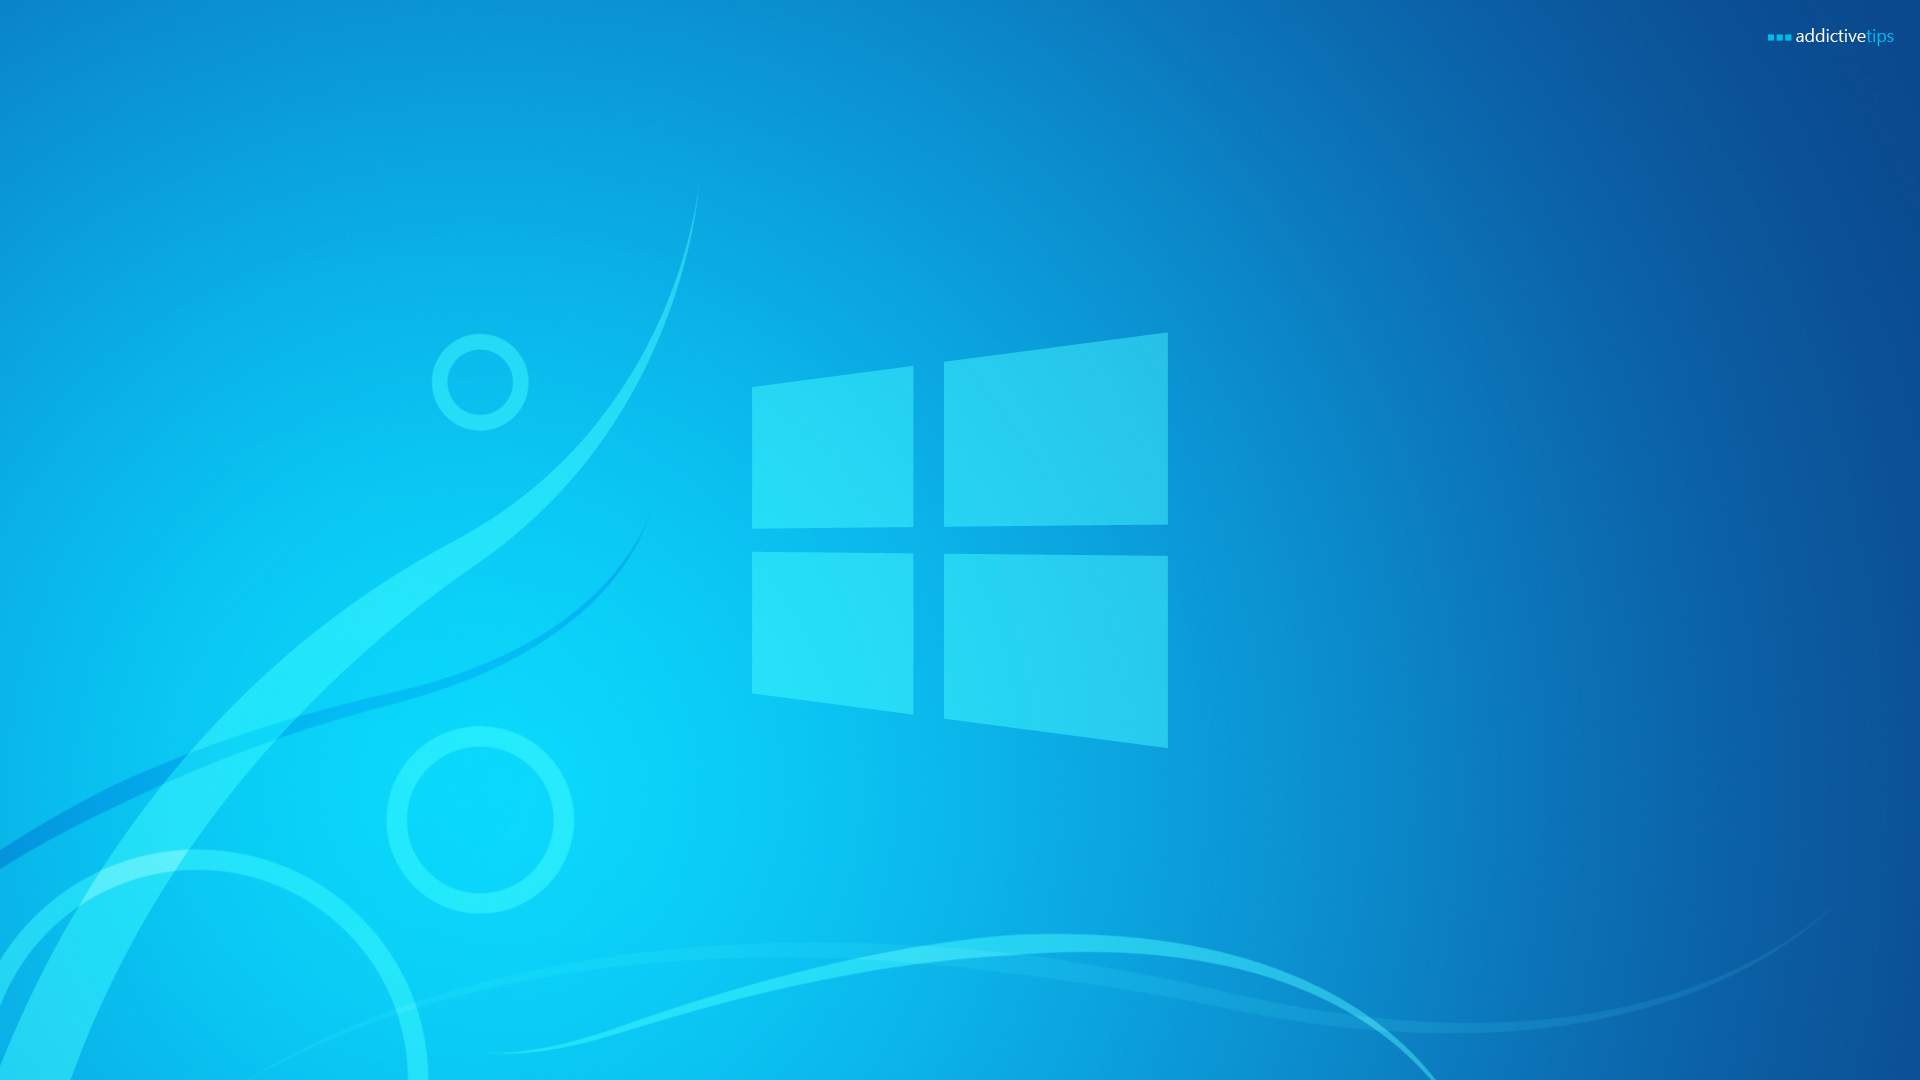 Installing Windows 8 on Windows 7 via Parallels